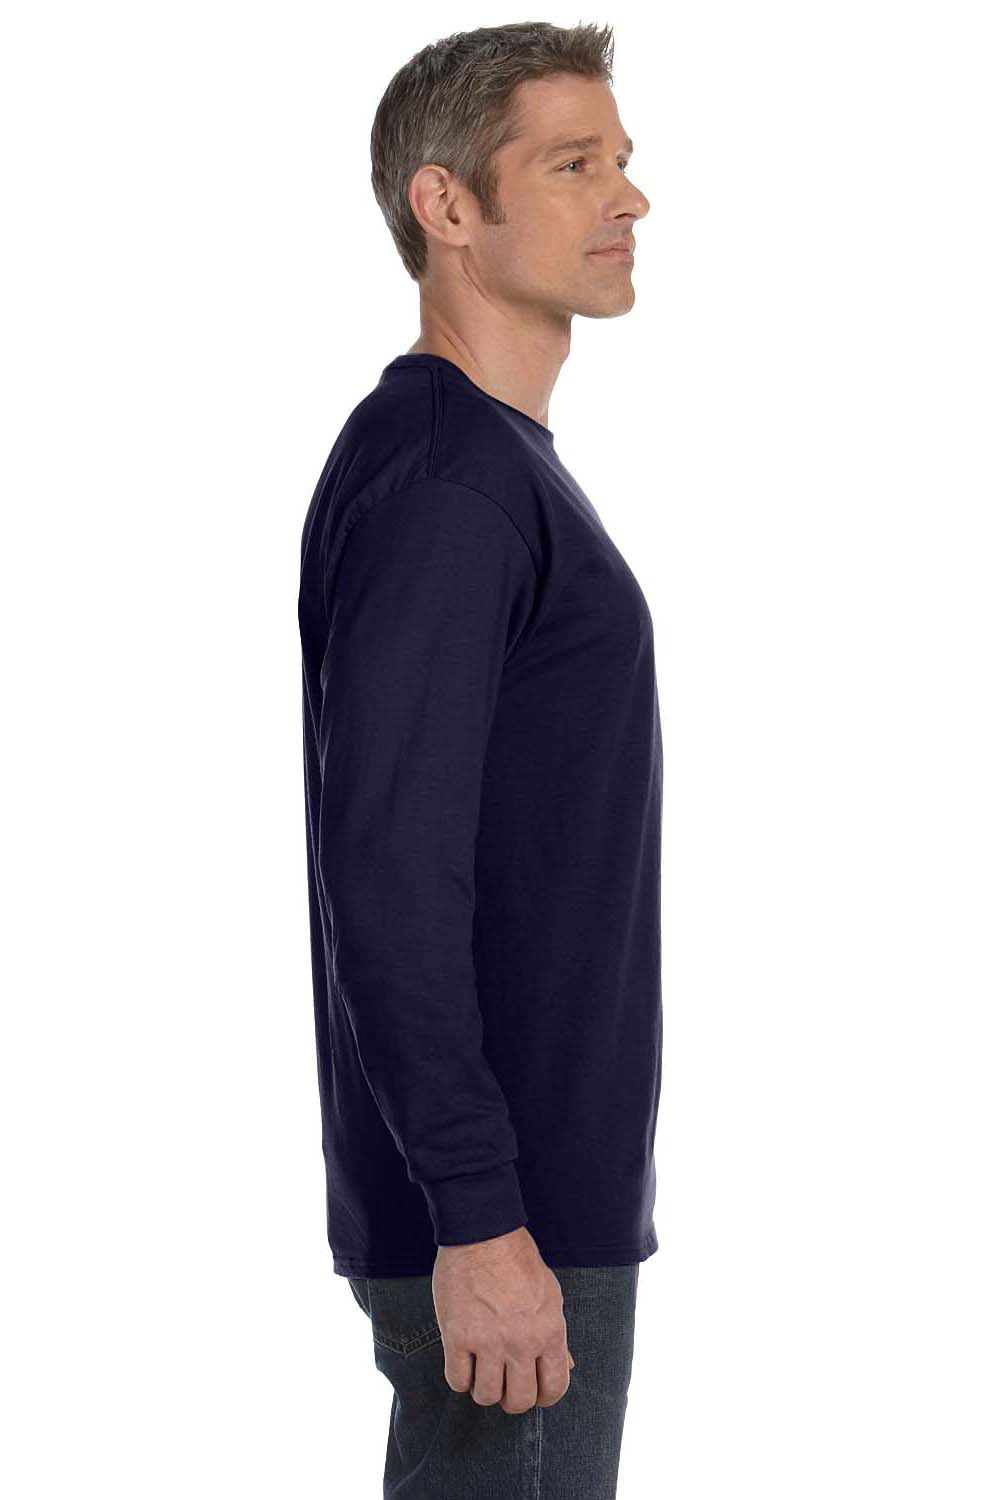 Hanes 5586 Mens ComfortSoft Long Sleeve Crewneck T-Shirt Navy Blue Side